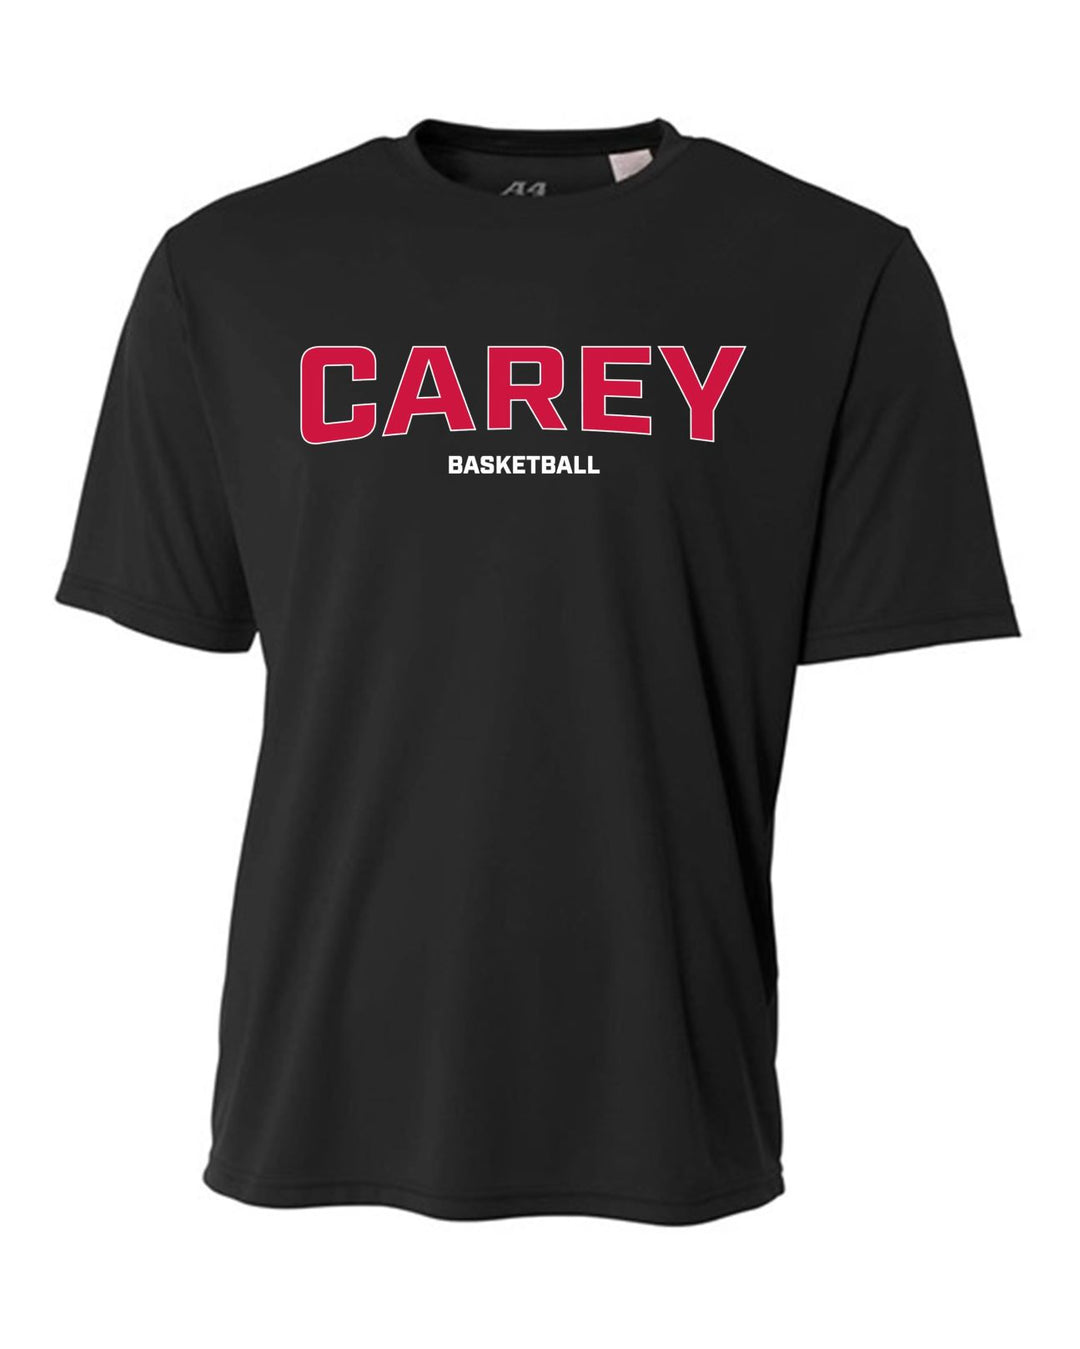 WCU Basketball Men's Short-Sleeve Performance Shirt WCU Basketball Black CAREY - Third Coast Soccer